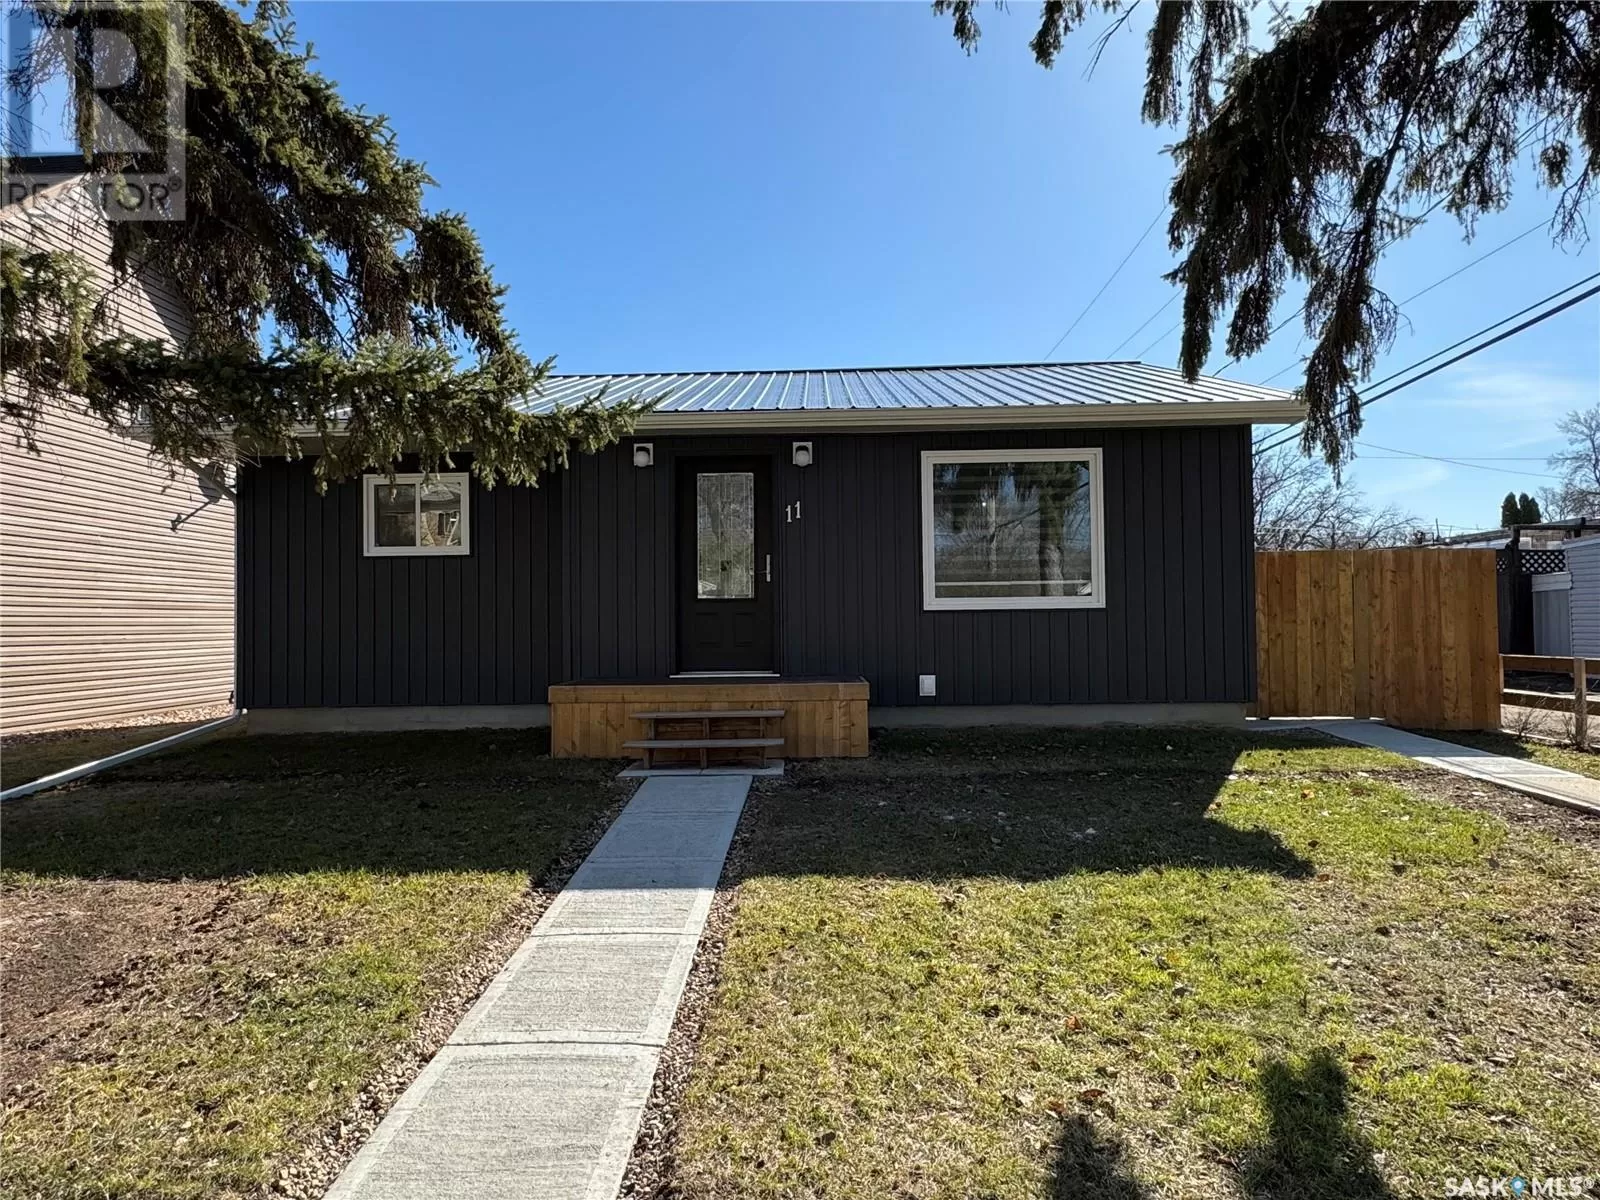 House for rent: 11 Macfarline Avenue, Yorkton, Saskatchewan S3N 2C5